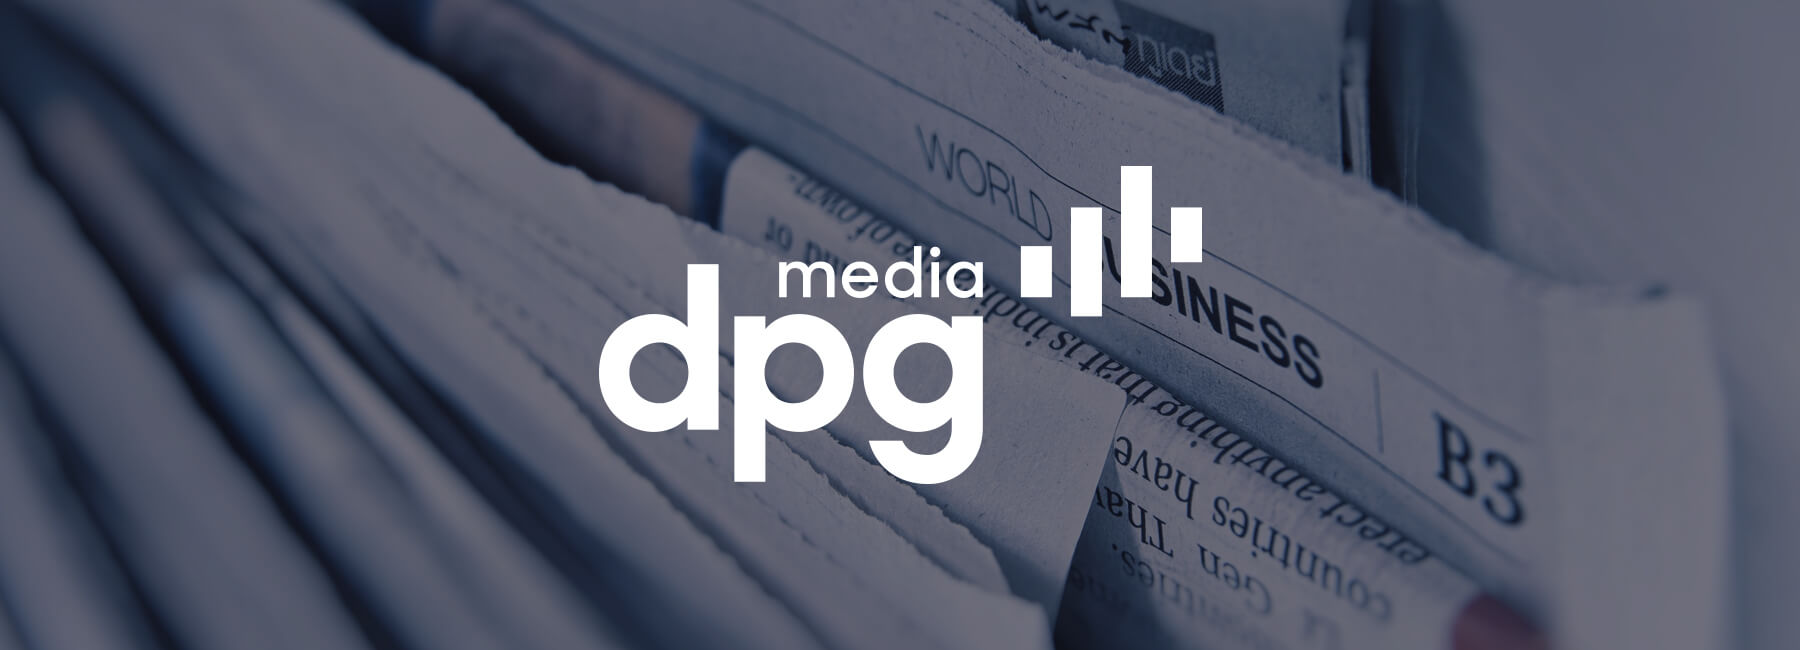 DPG Media rolls out feedback across online news brands